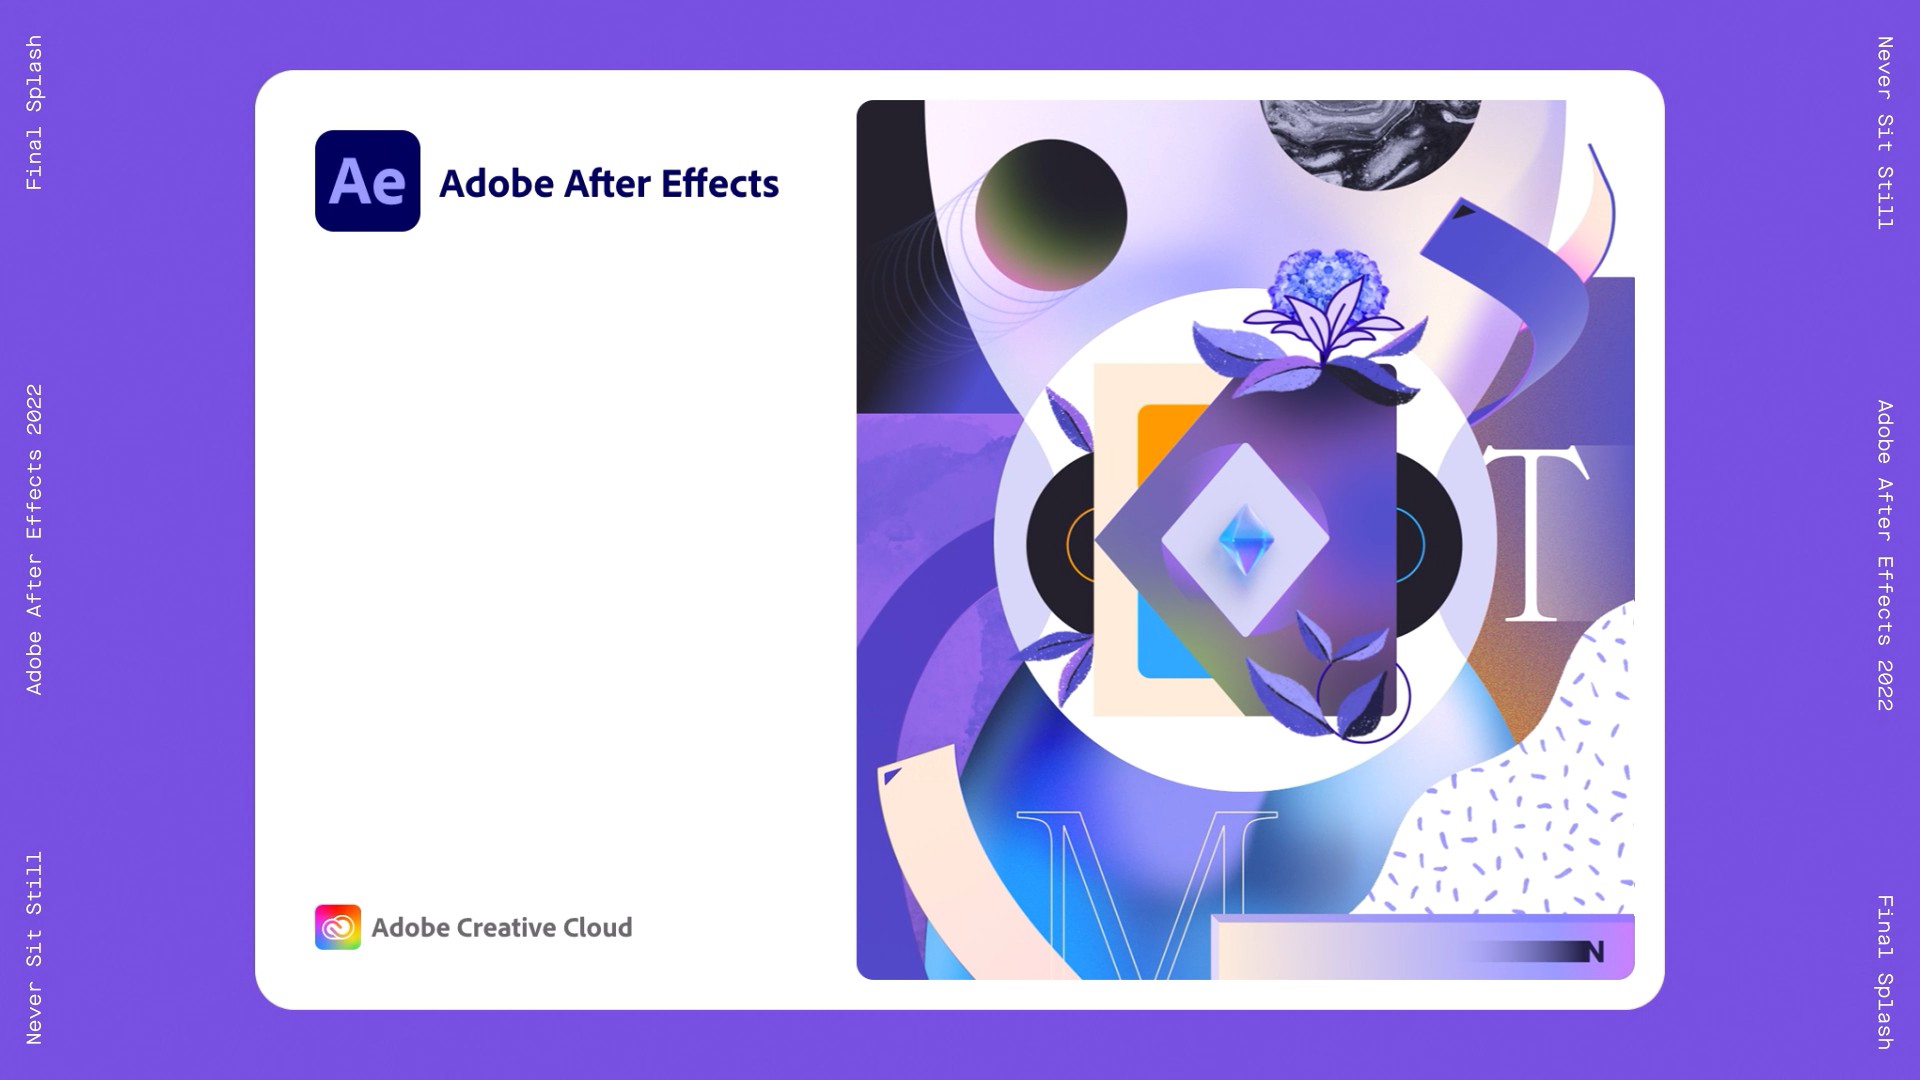 Adobe After Effects Artwork / Never Sit Still